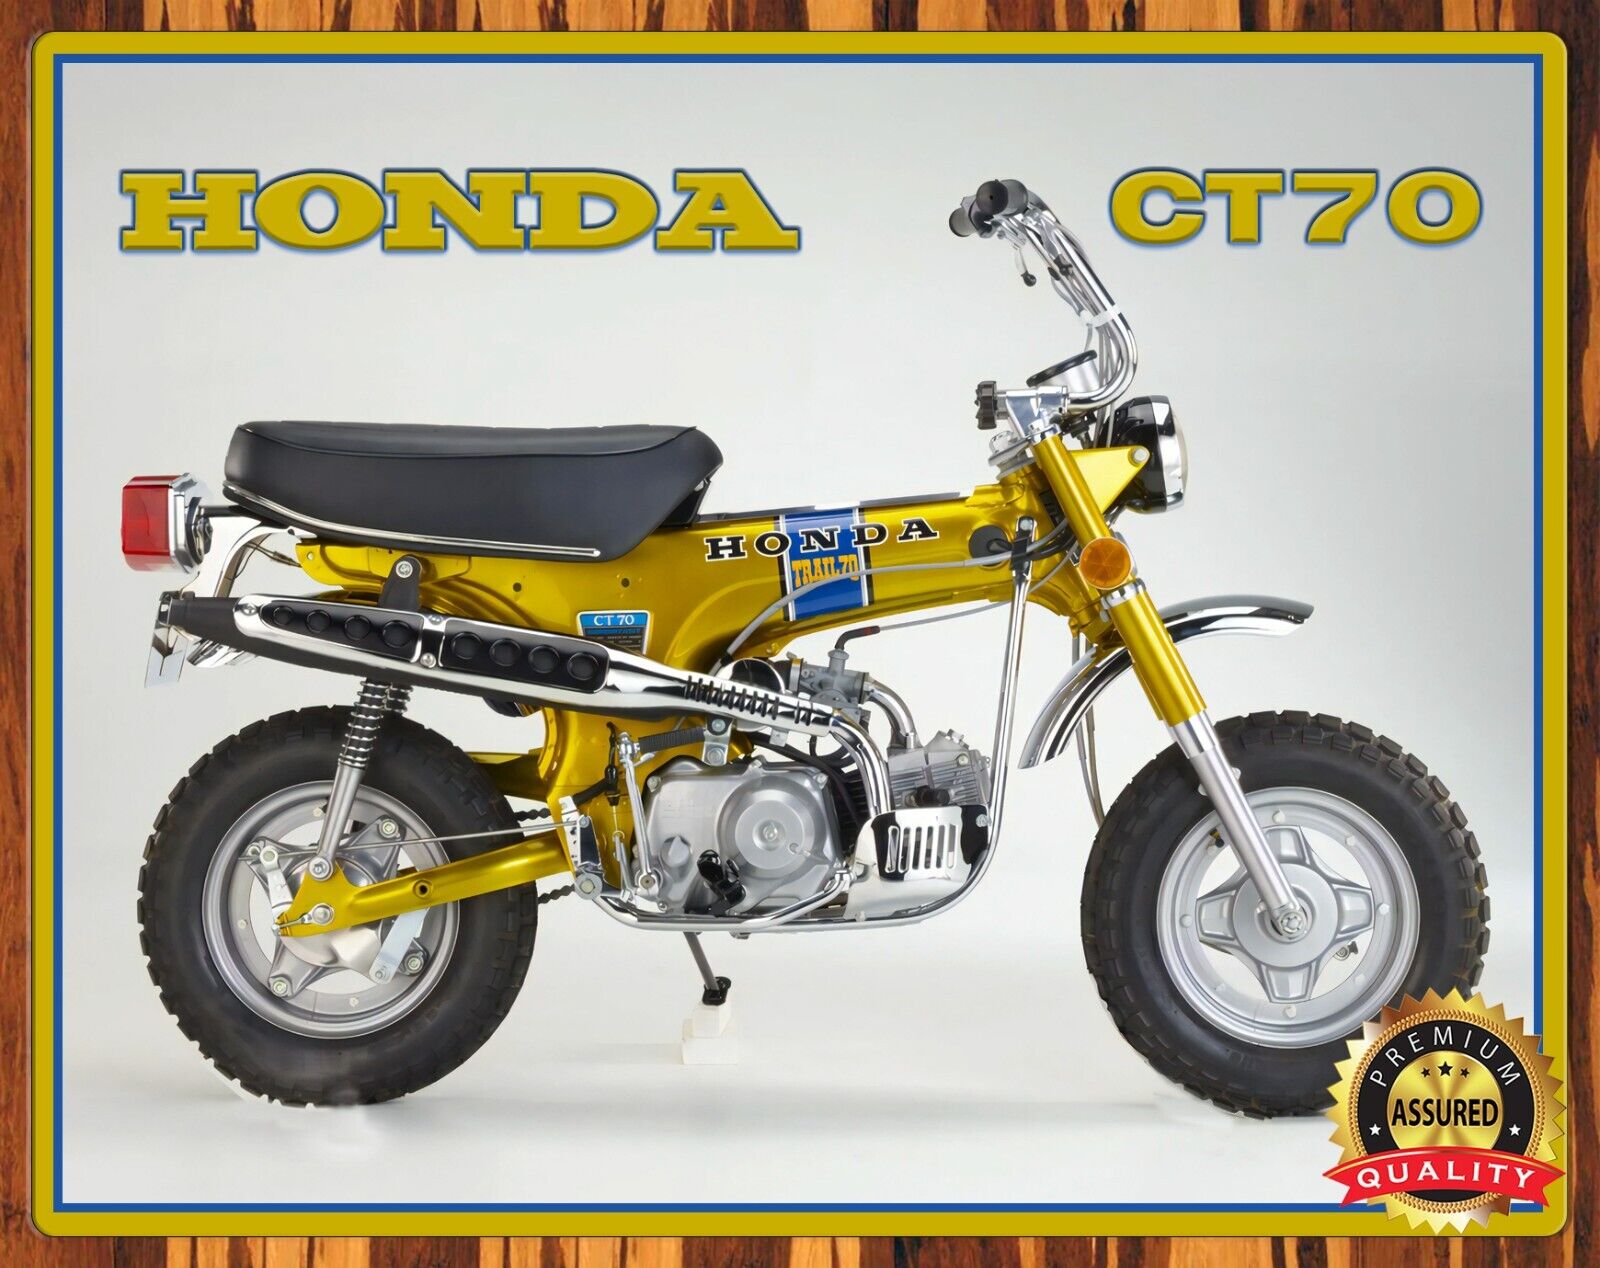 1972 Honda CT70 - Trail - Metal Sign 11 x 14